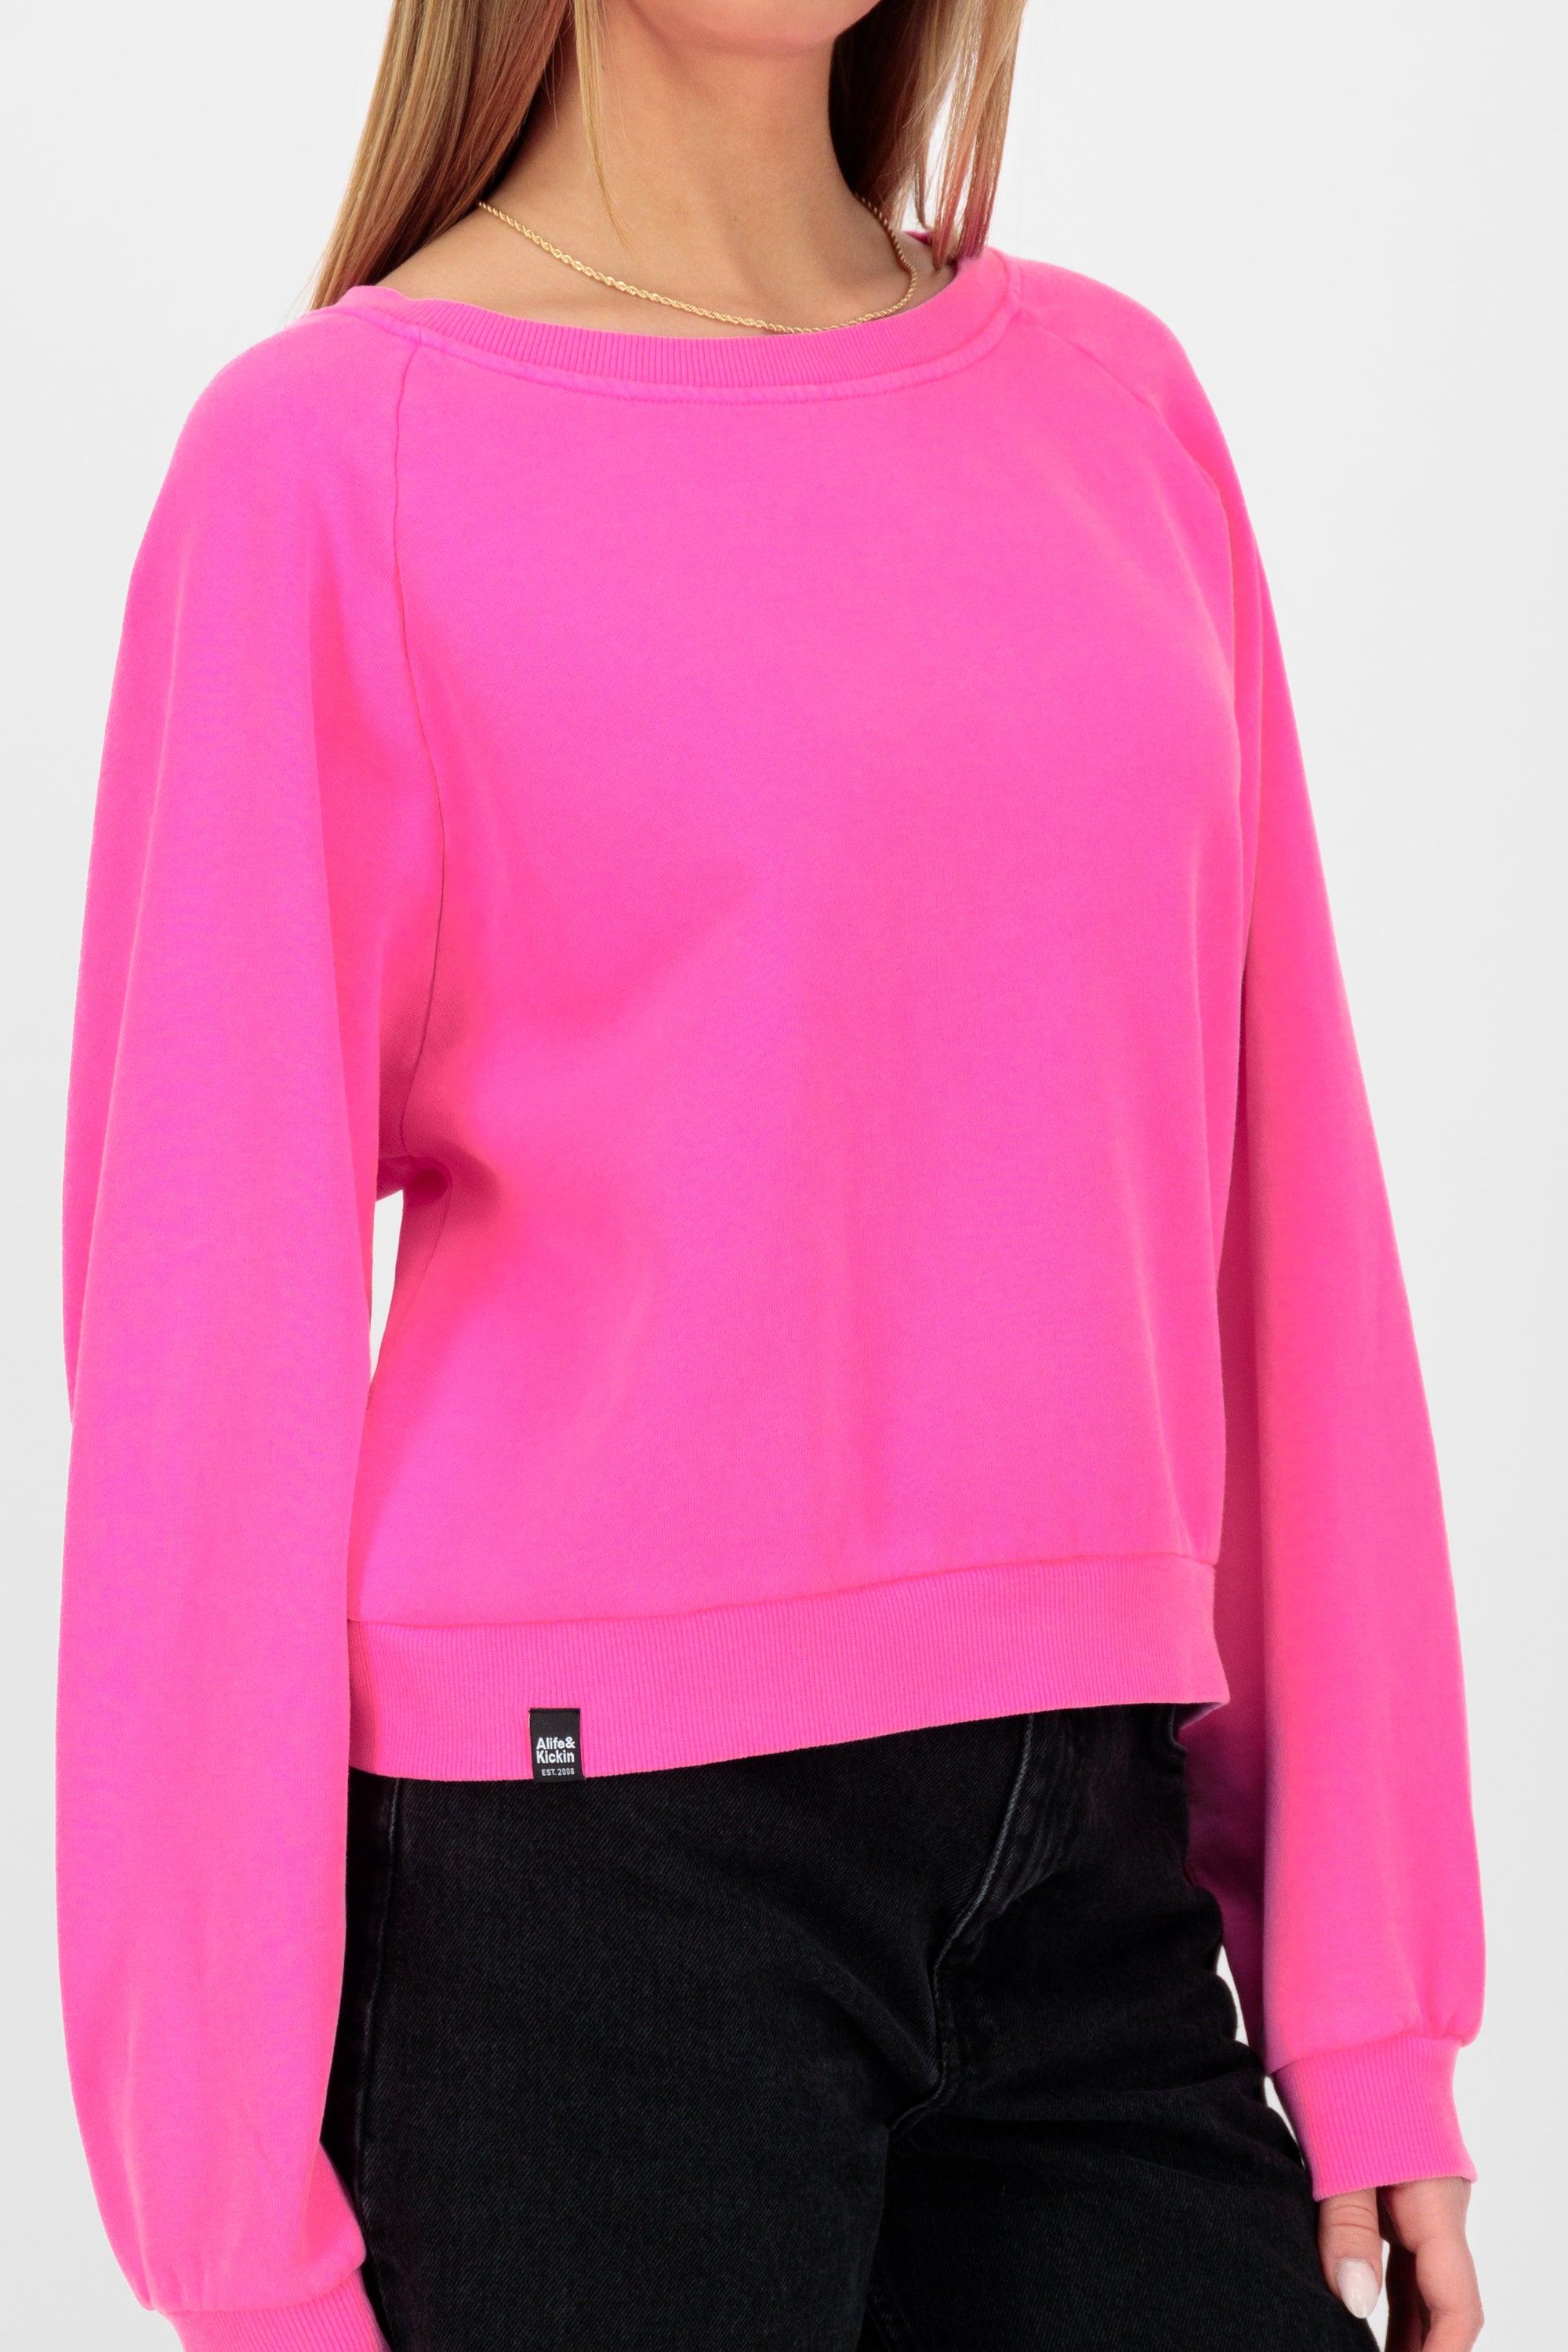 TeonaAK A Oversize Sweatshirt  Pink